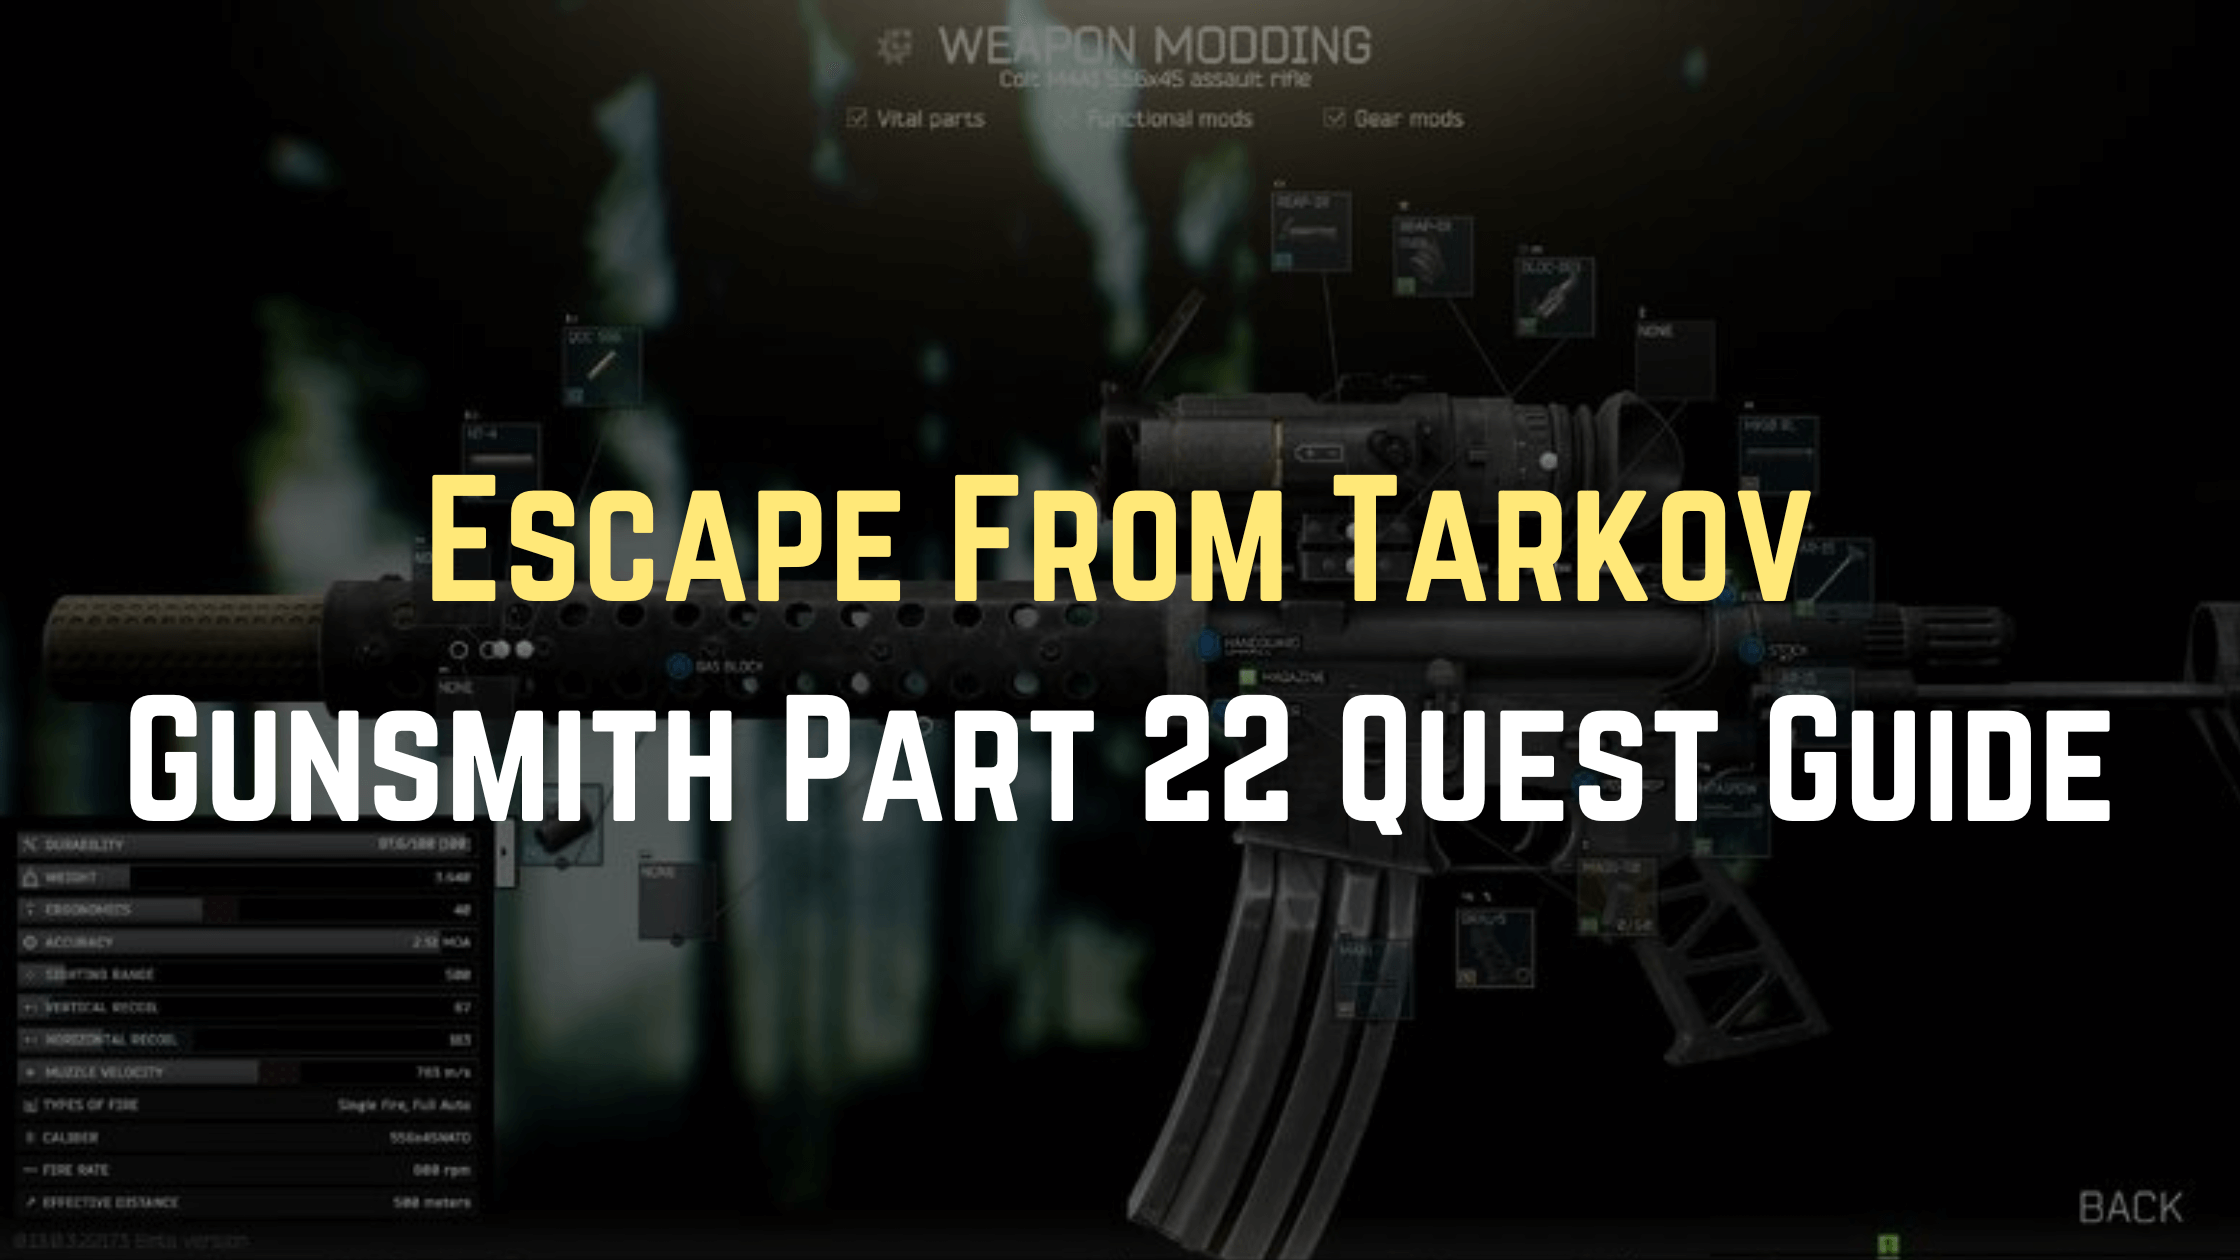 Gunsmith Part 22 Escape from Tarkov